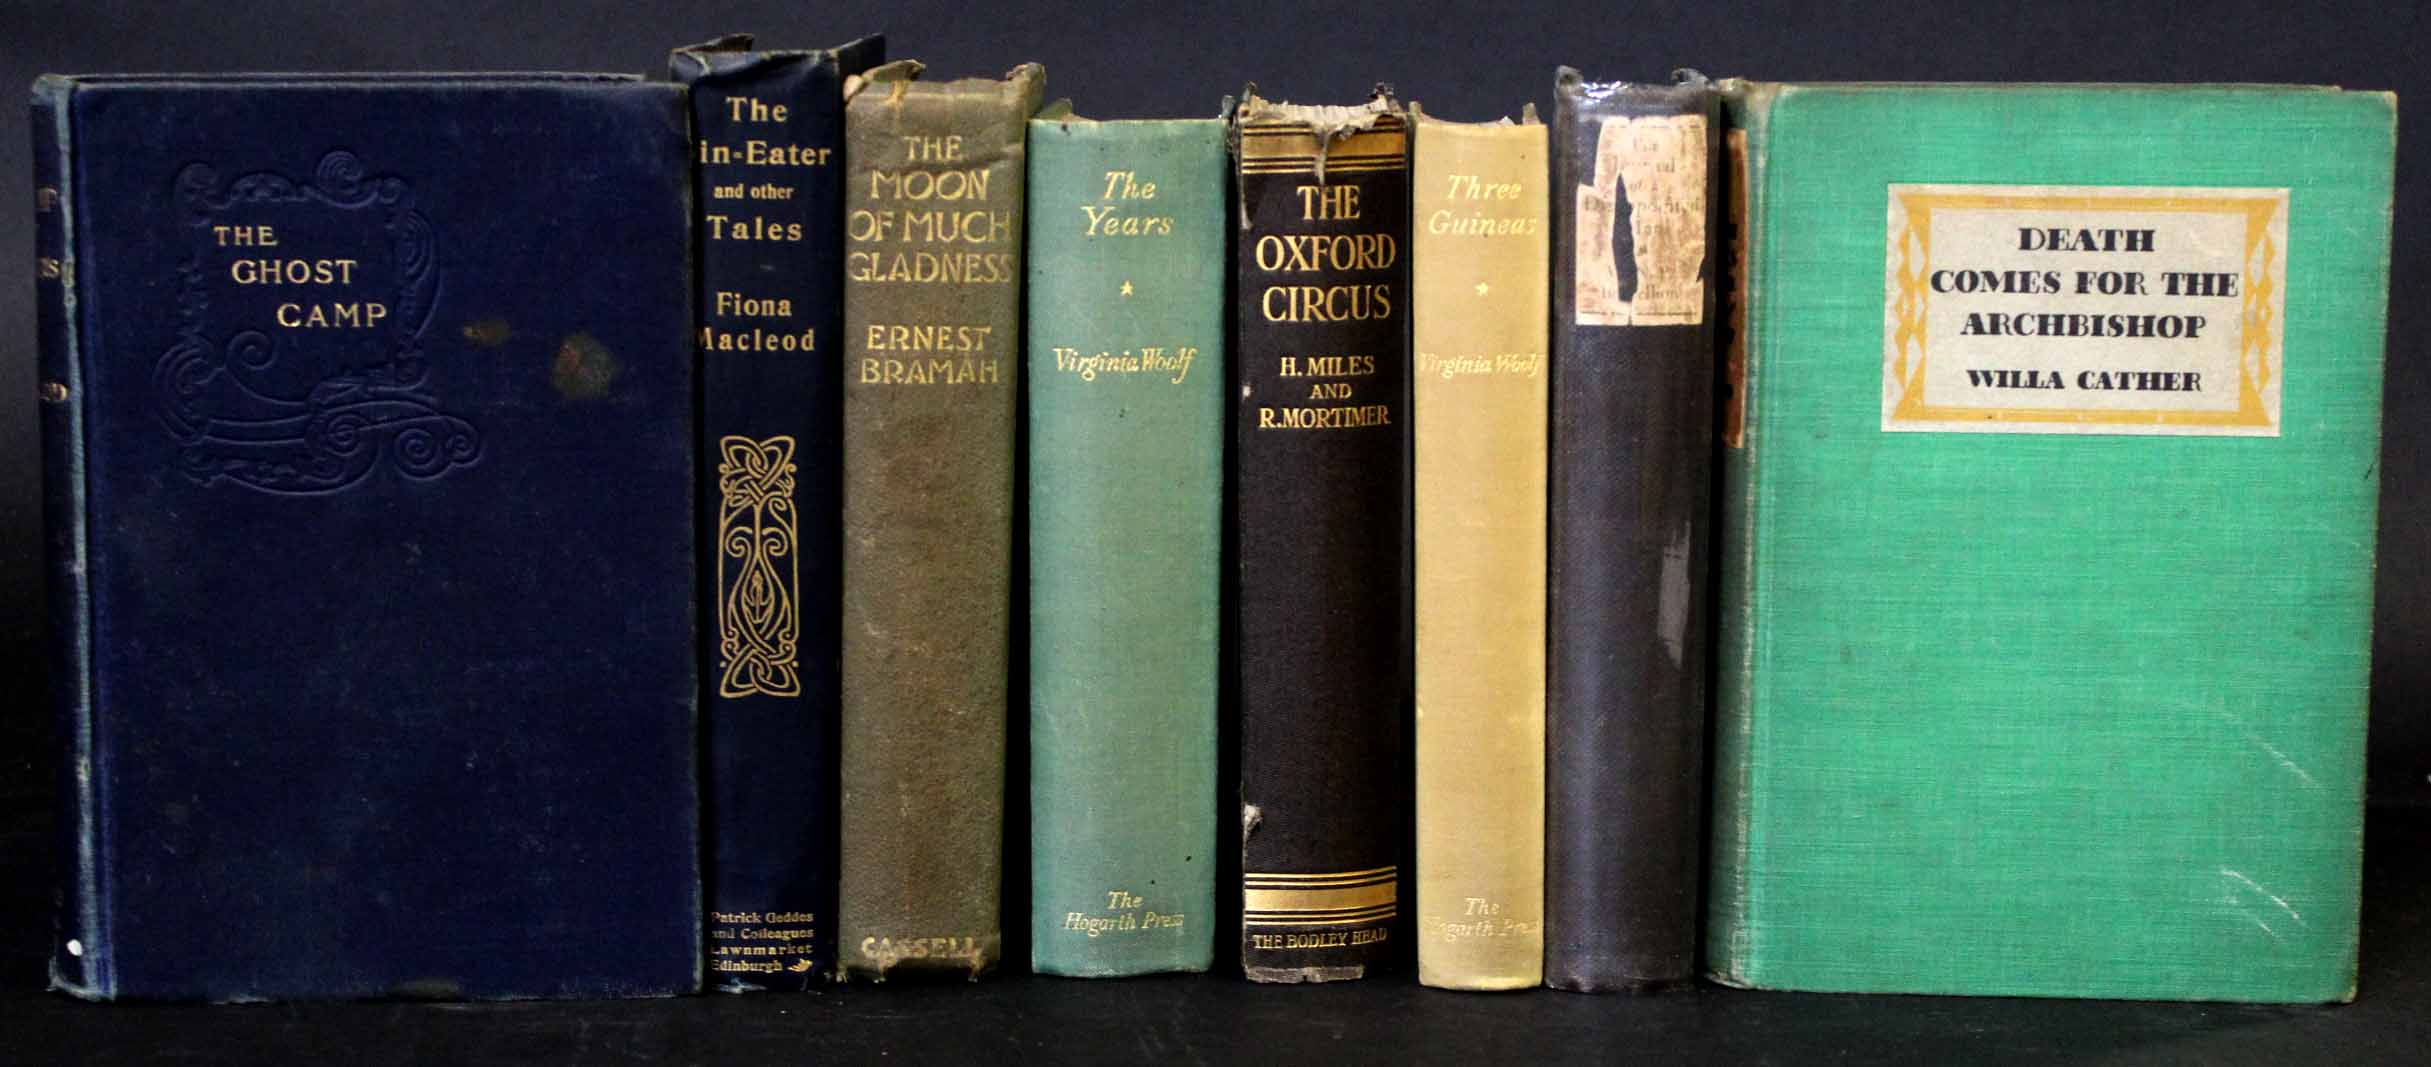 VIRGINIA WOOLF: 2 titles: THE YEARS, The Hogarth Press, 1937, 1st edition, original cloth; THREE